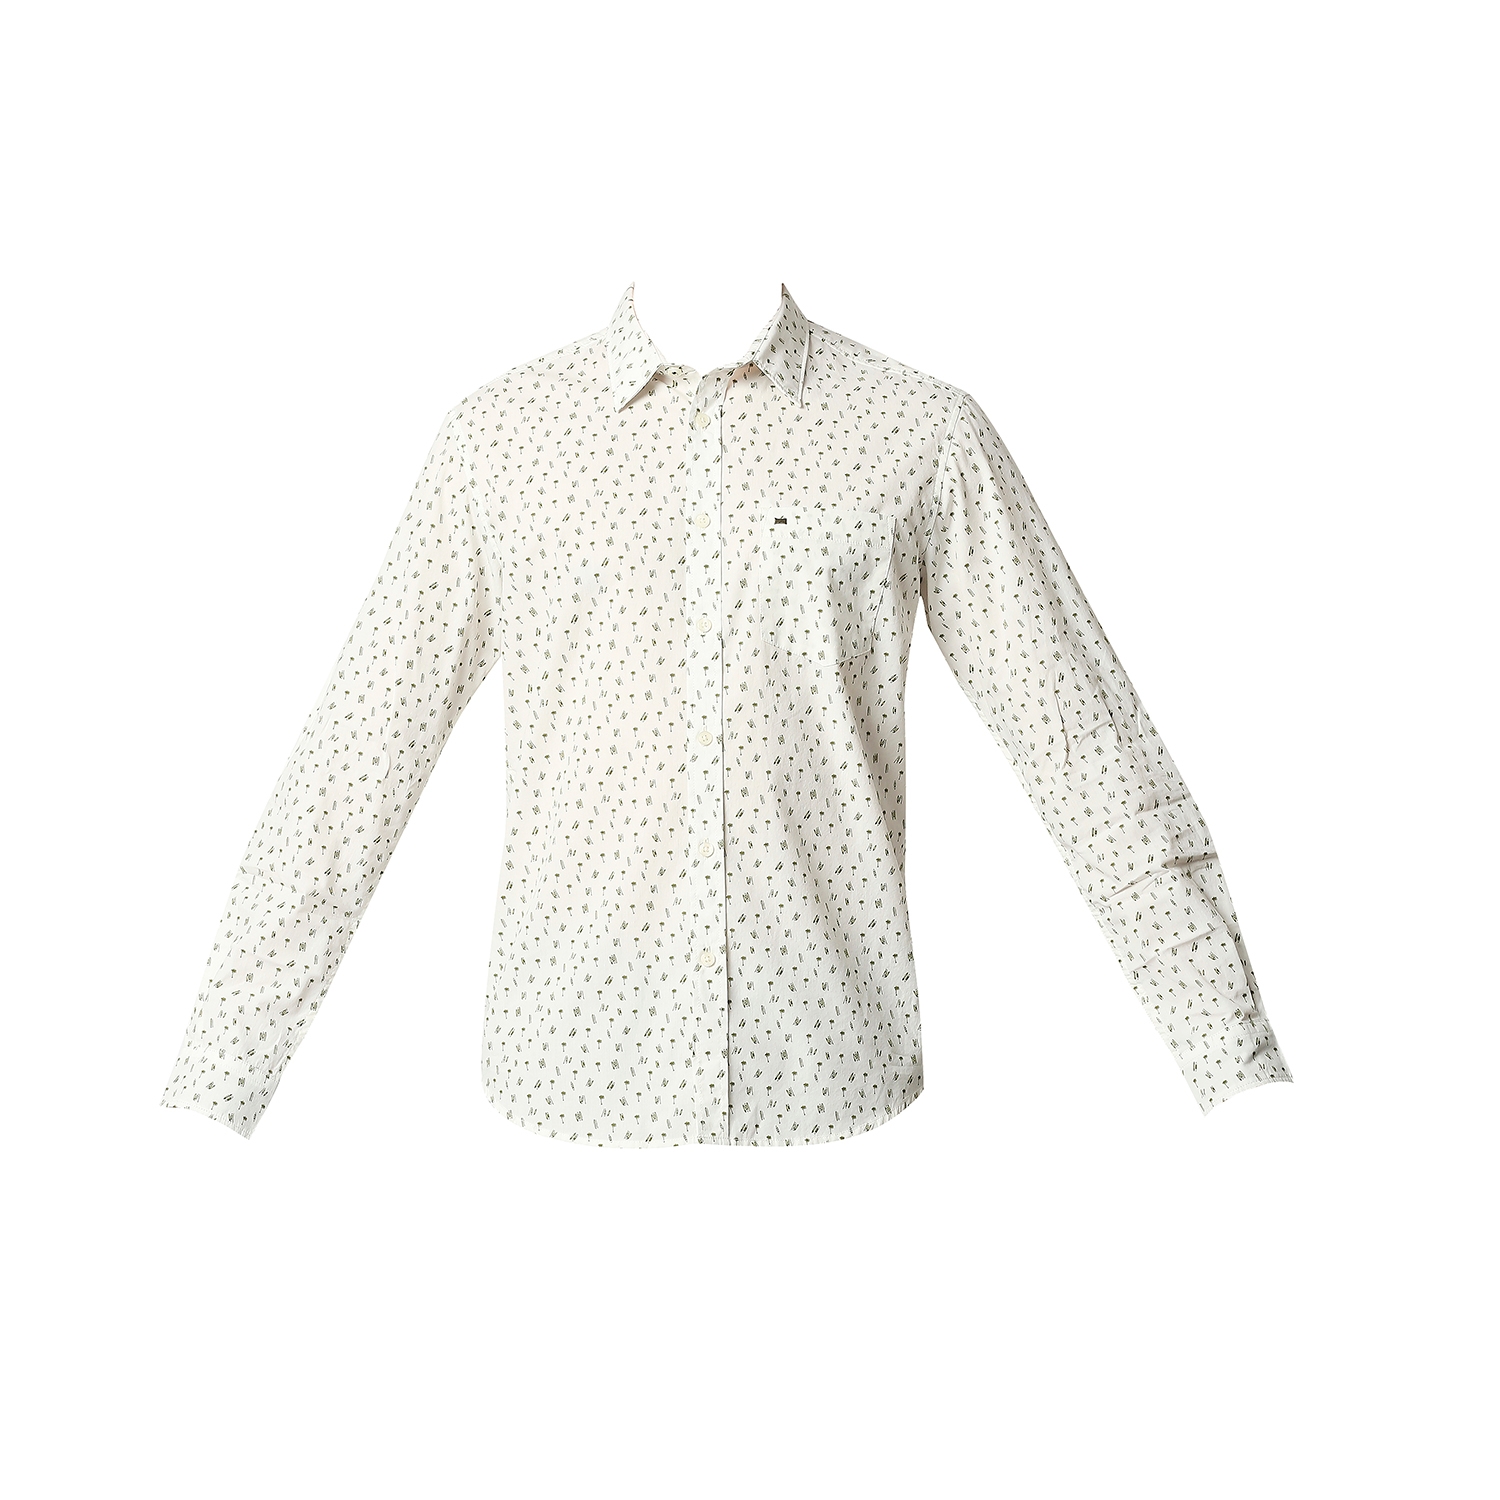 Basics | Men's Beige Cotton Printed Casual Shirt 5